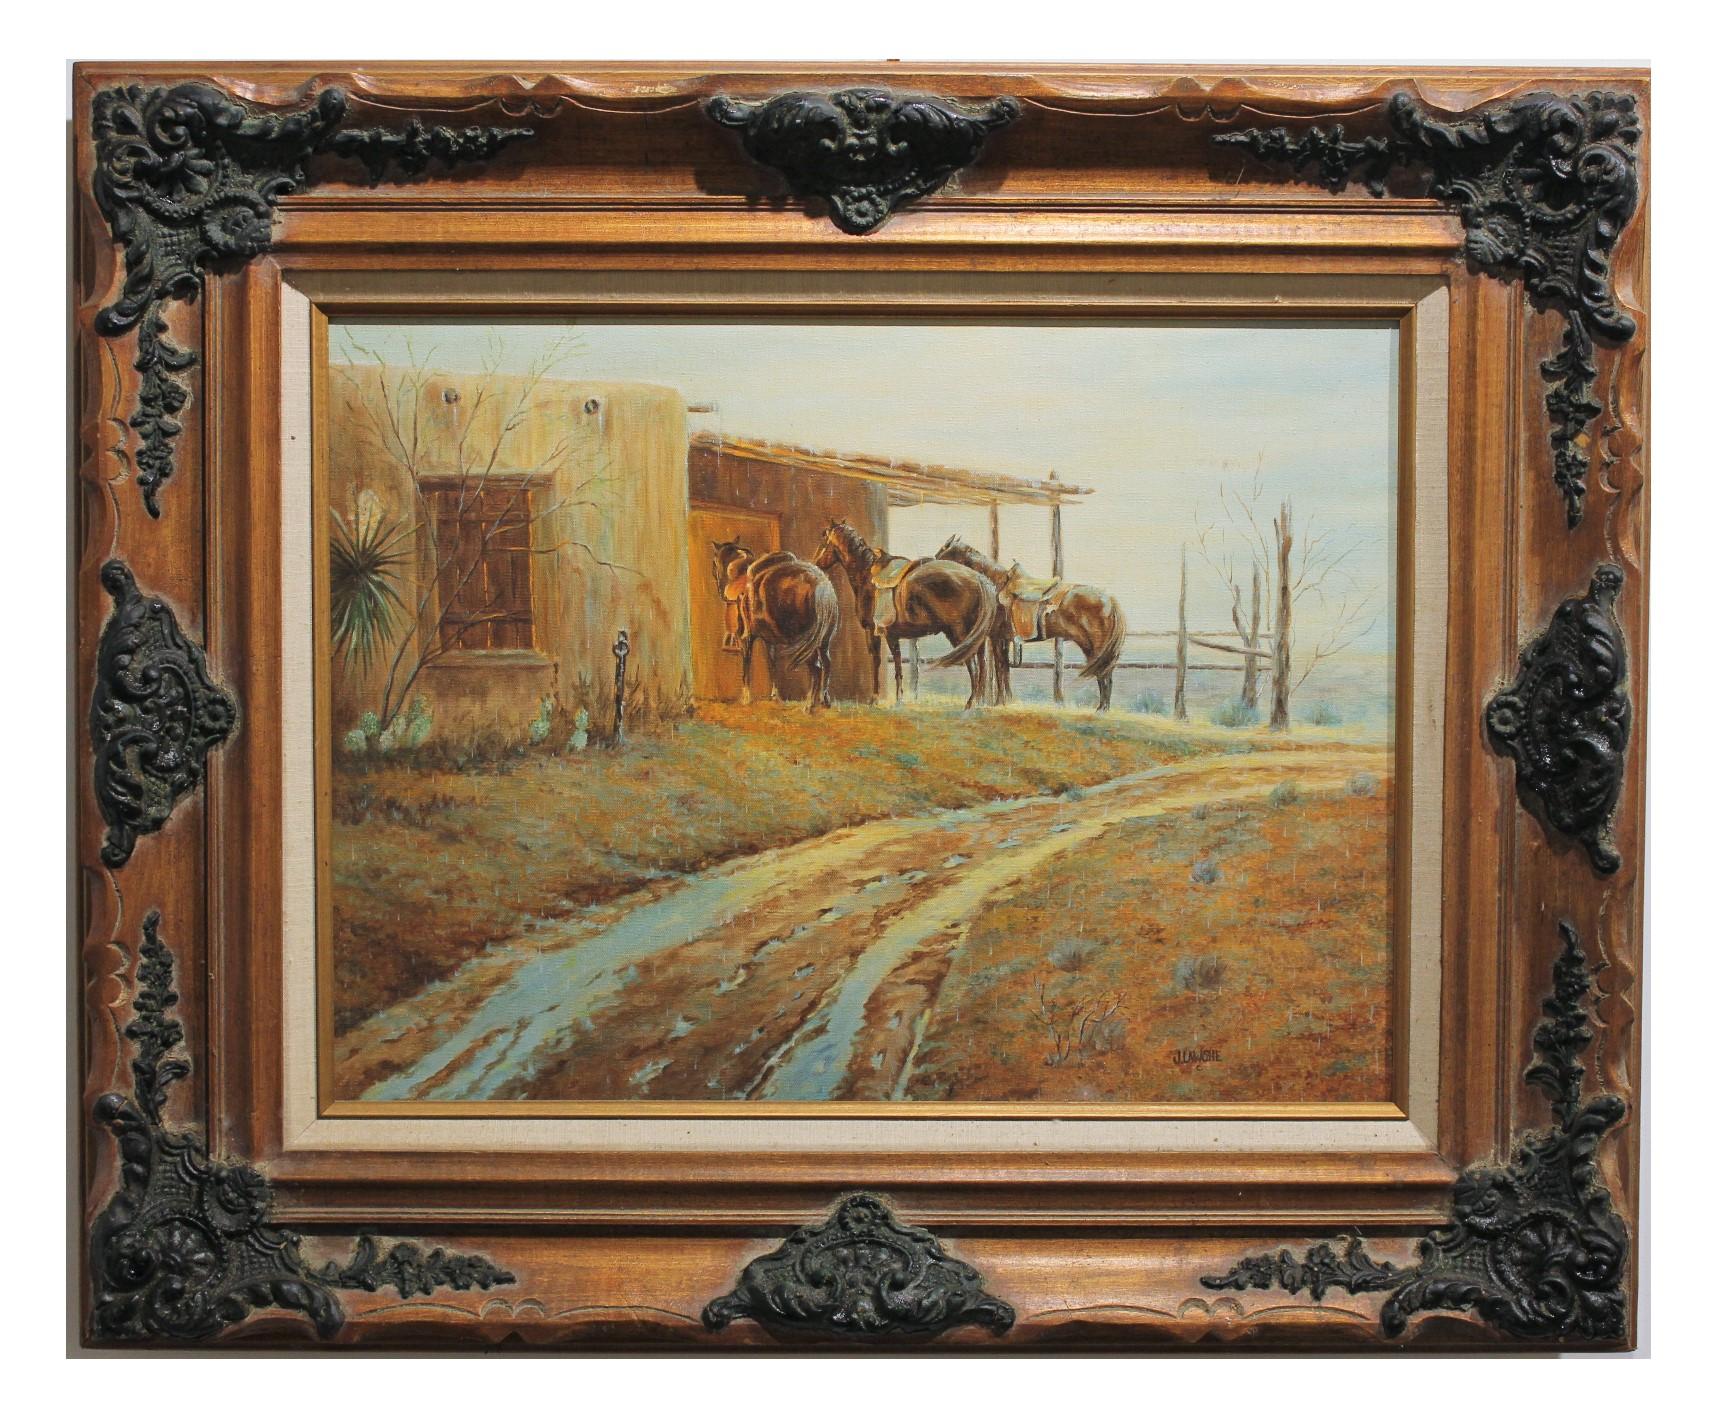 J. Lawshe Landscape Painting - Naturalistic Raining Western Scene with Horses